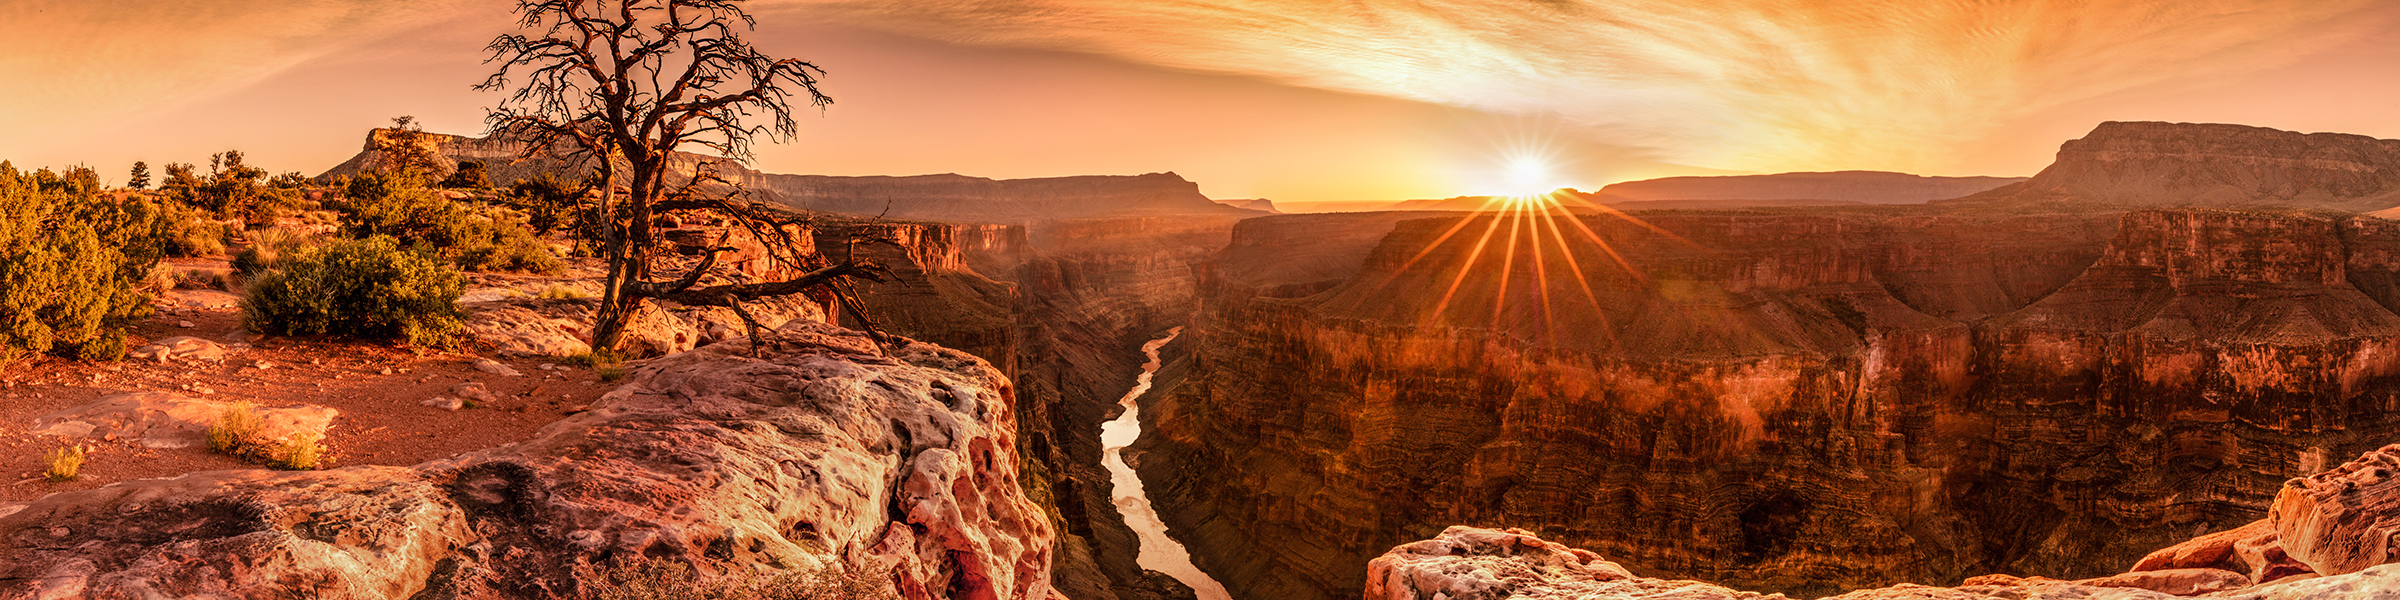 United States Grand Canyon 